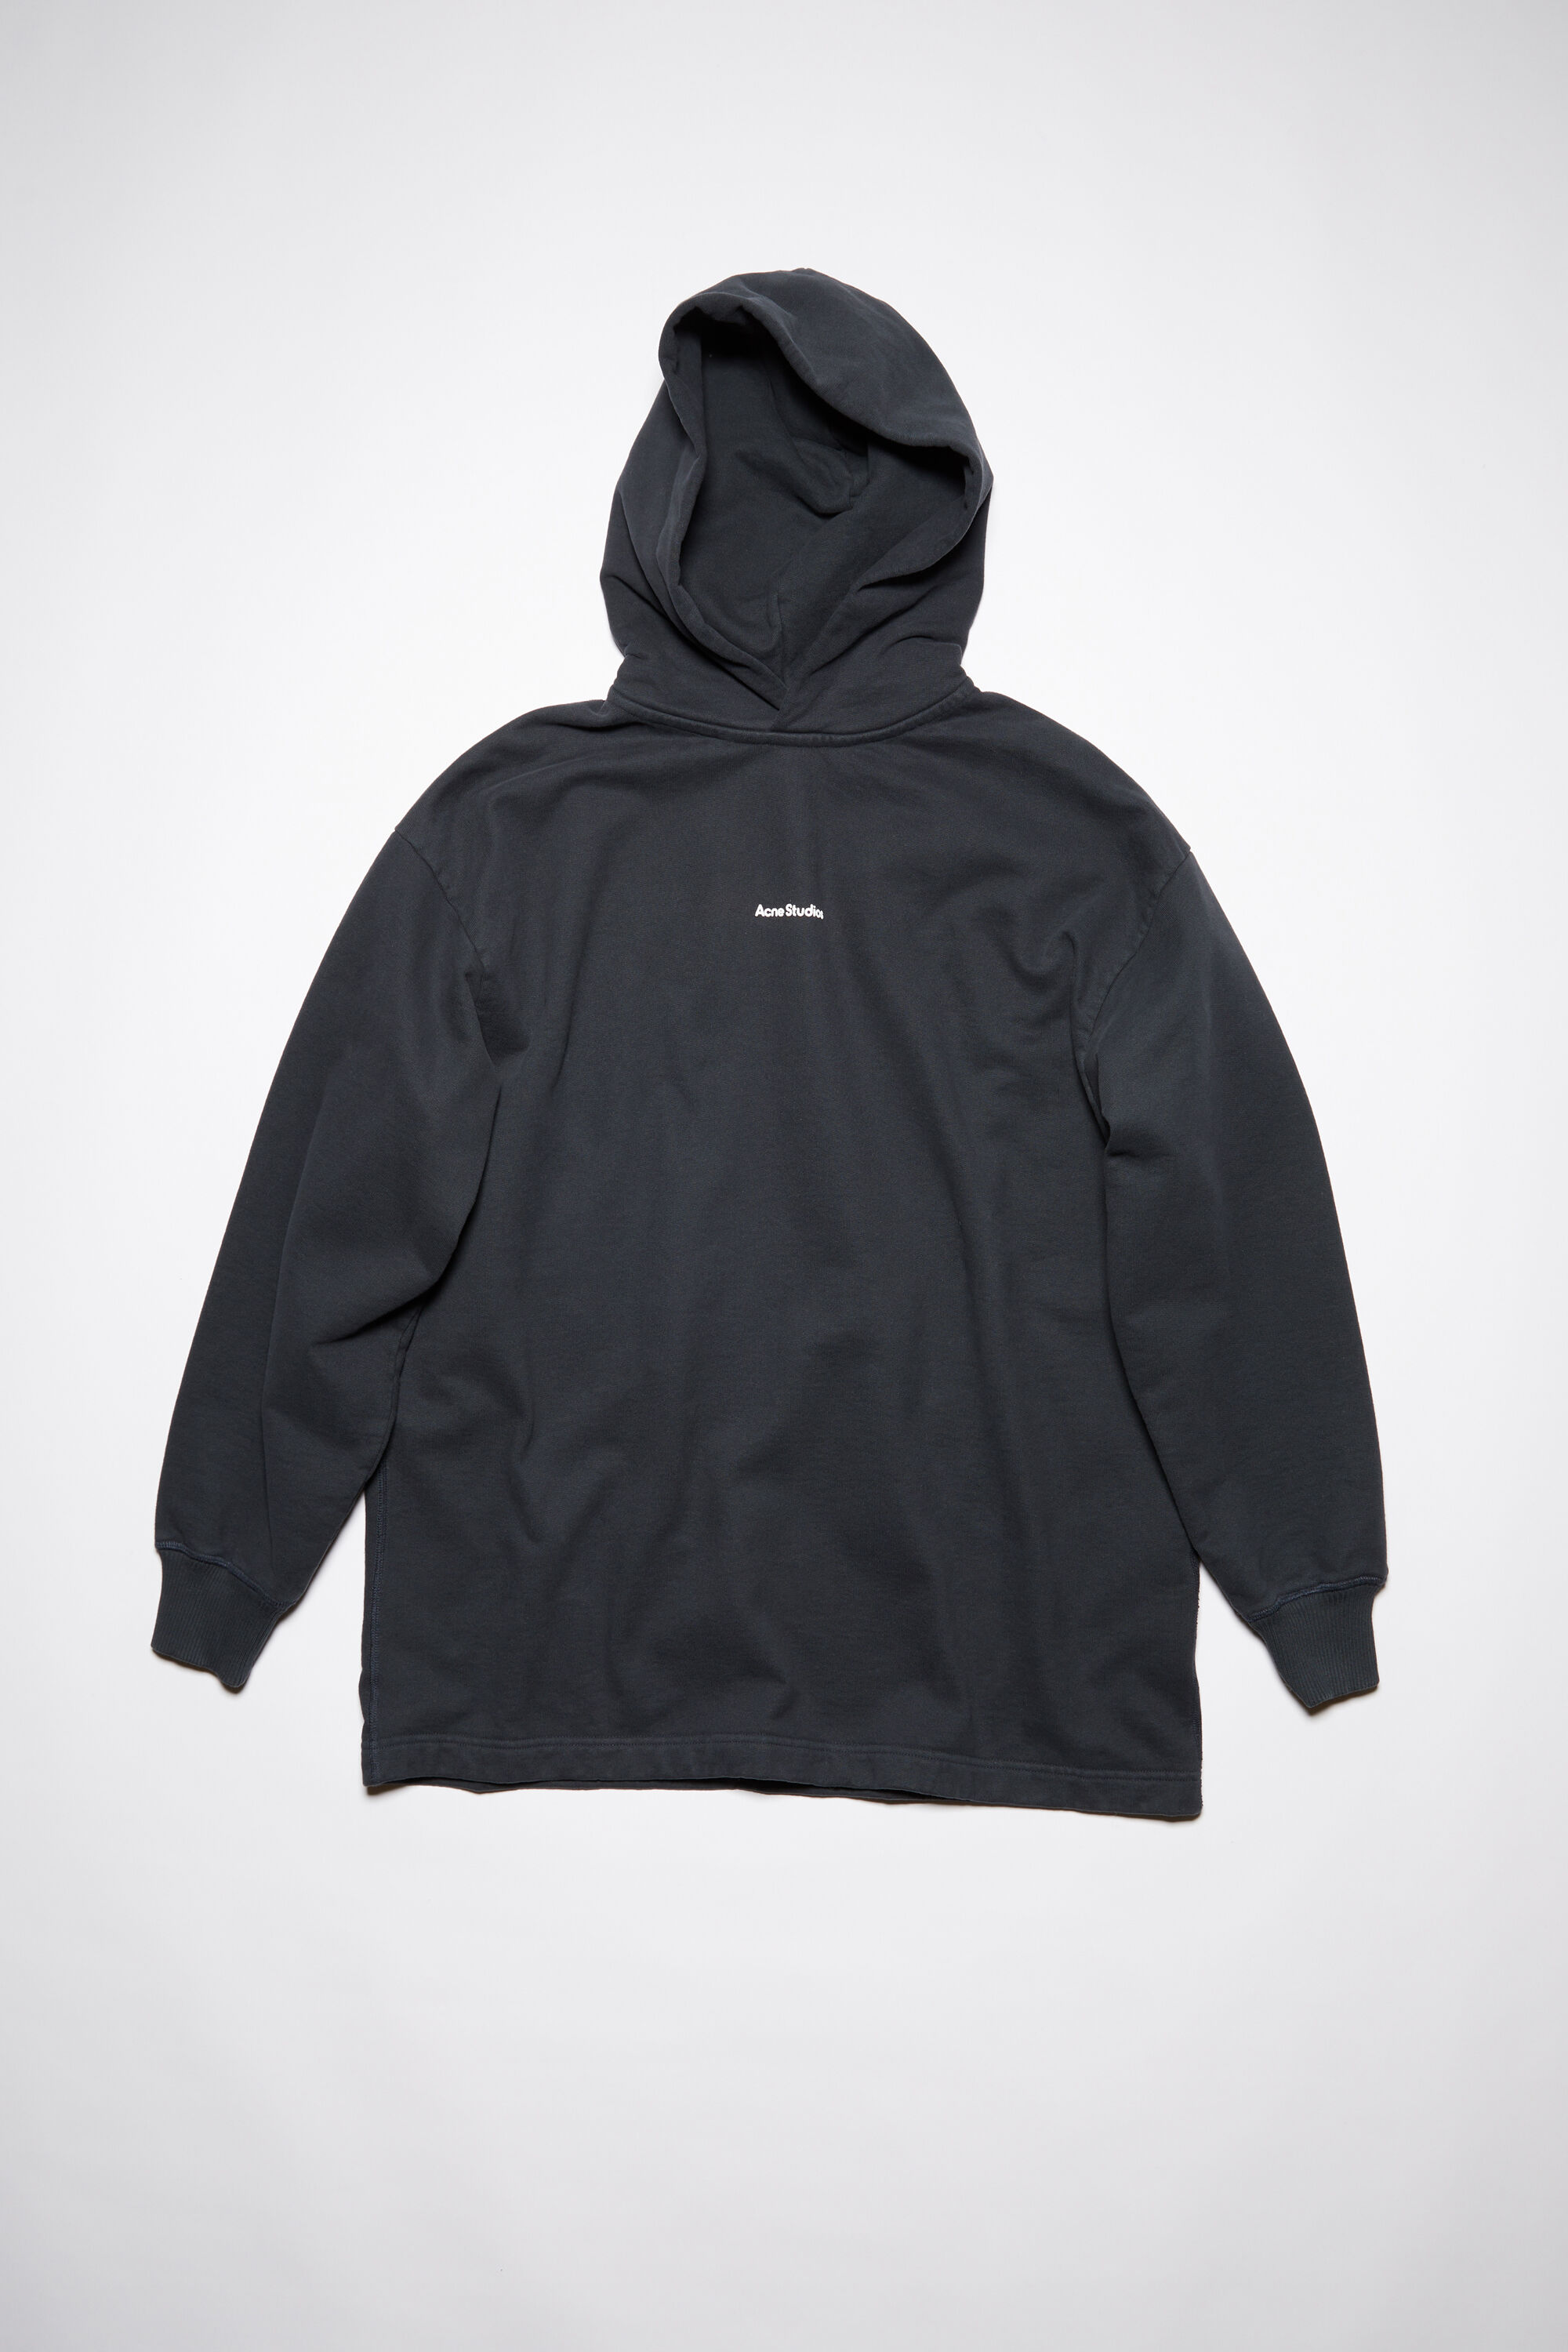 Acne Studios - Logo hooded sweatshirt - Black